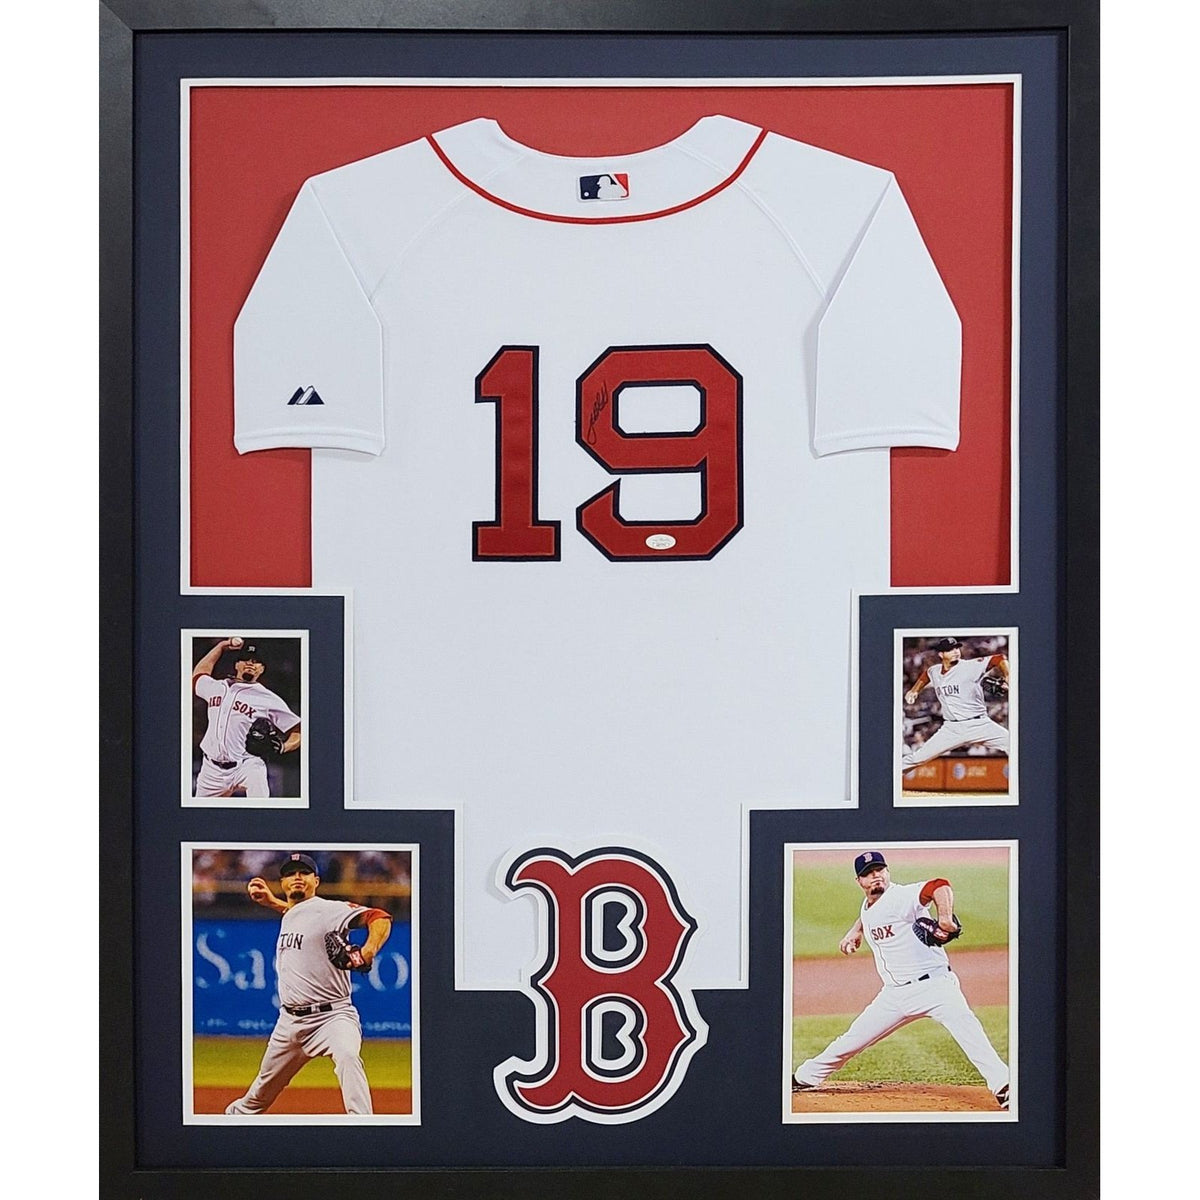 Josh Beckett Signed Framed Jersey JSA Autographed Boston Red Sox